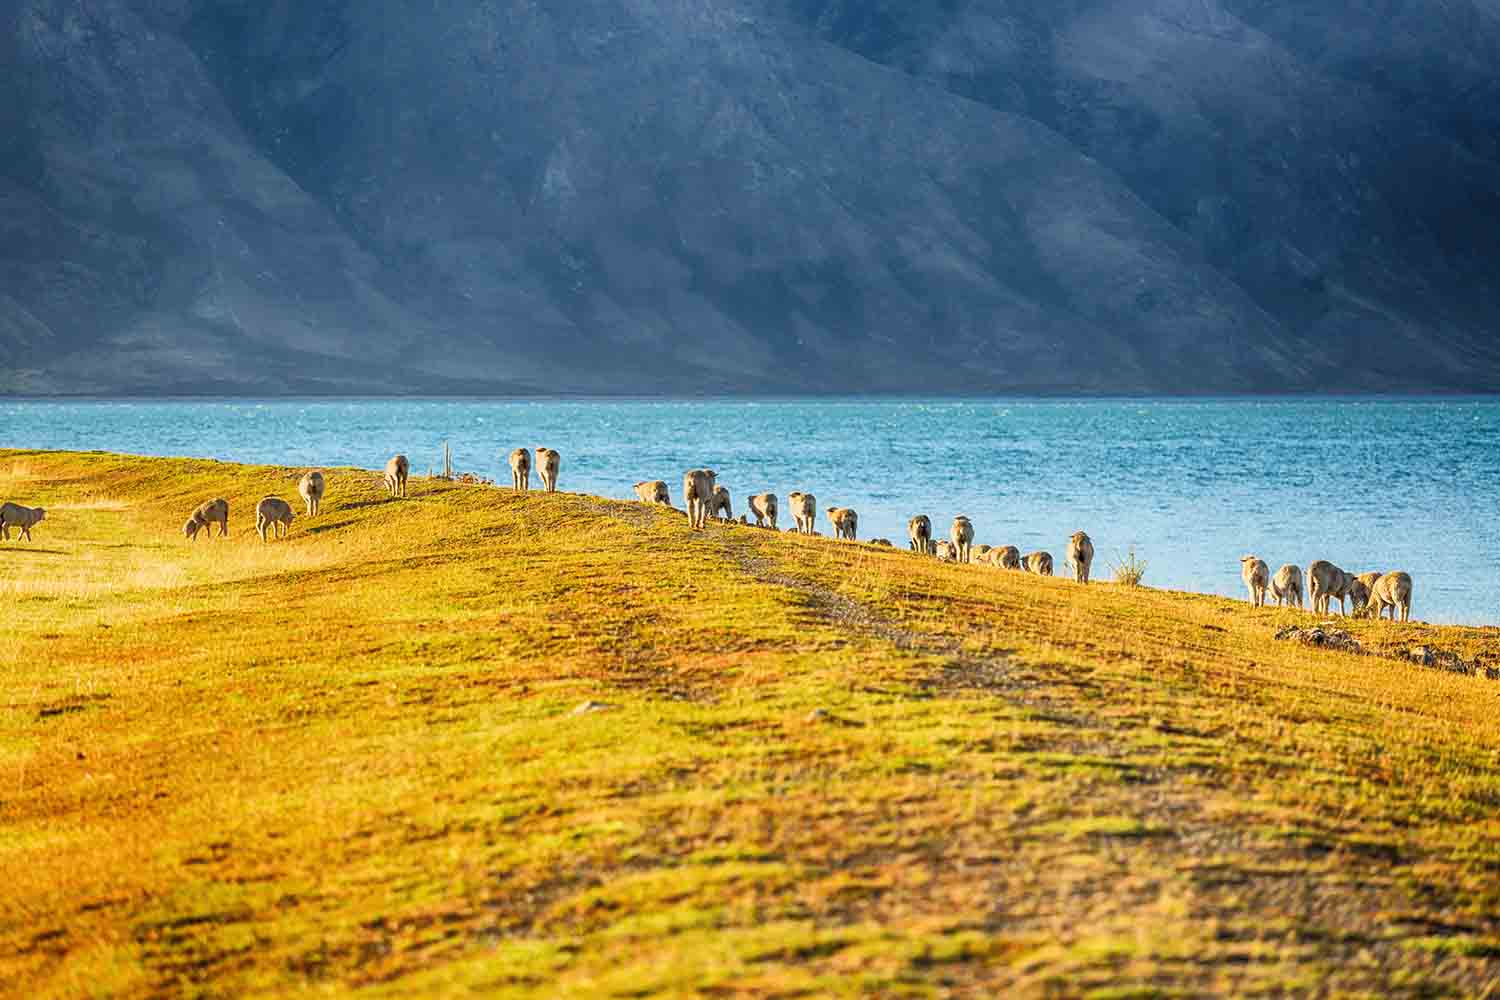 View of Sheep on the meadow at morning near lake wanaka, South Island New Zealand.